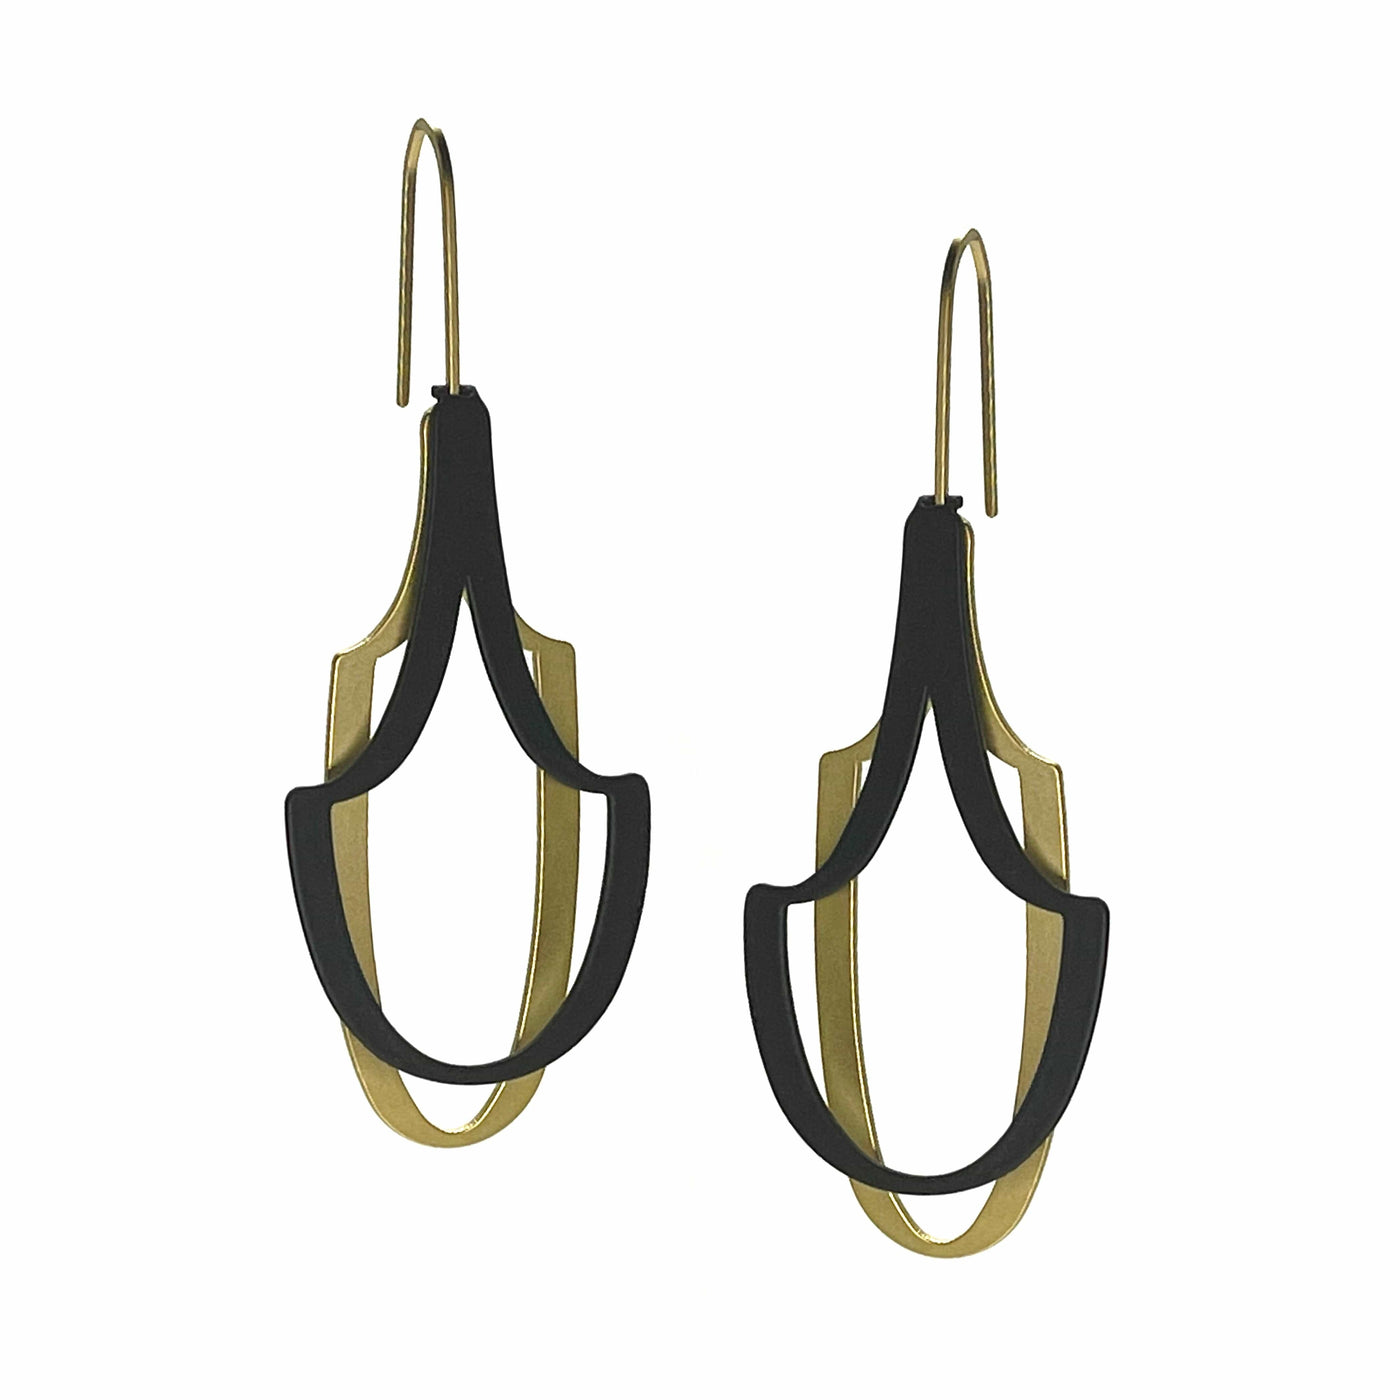 X2 Cloak Earrings - Raw/ Gold - inSync design